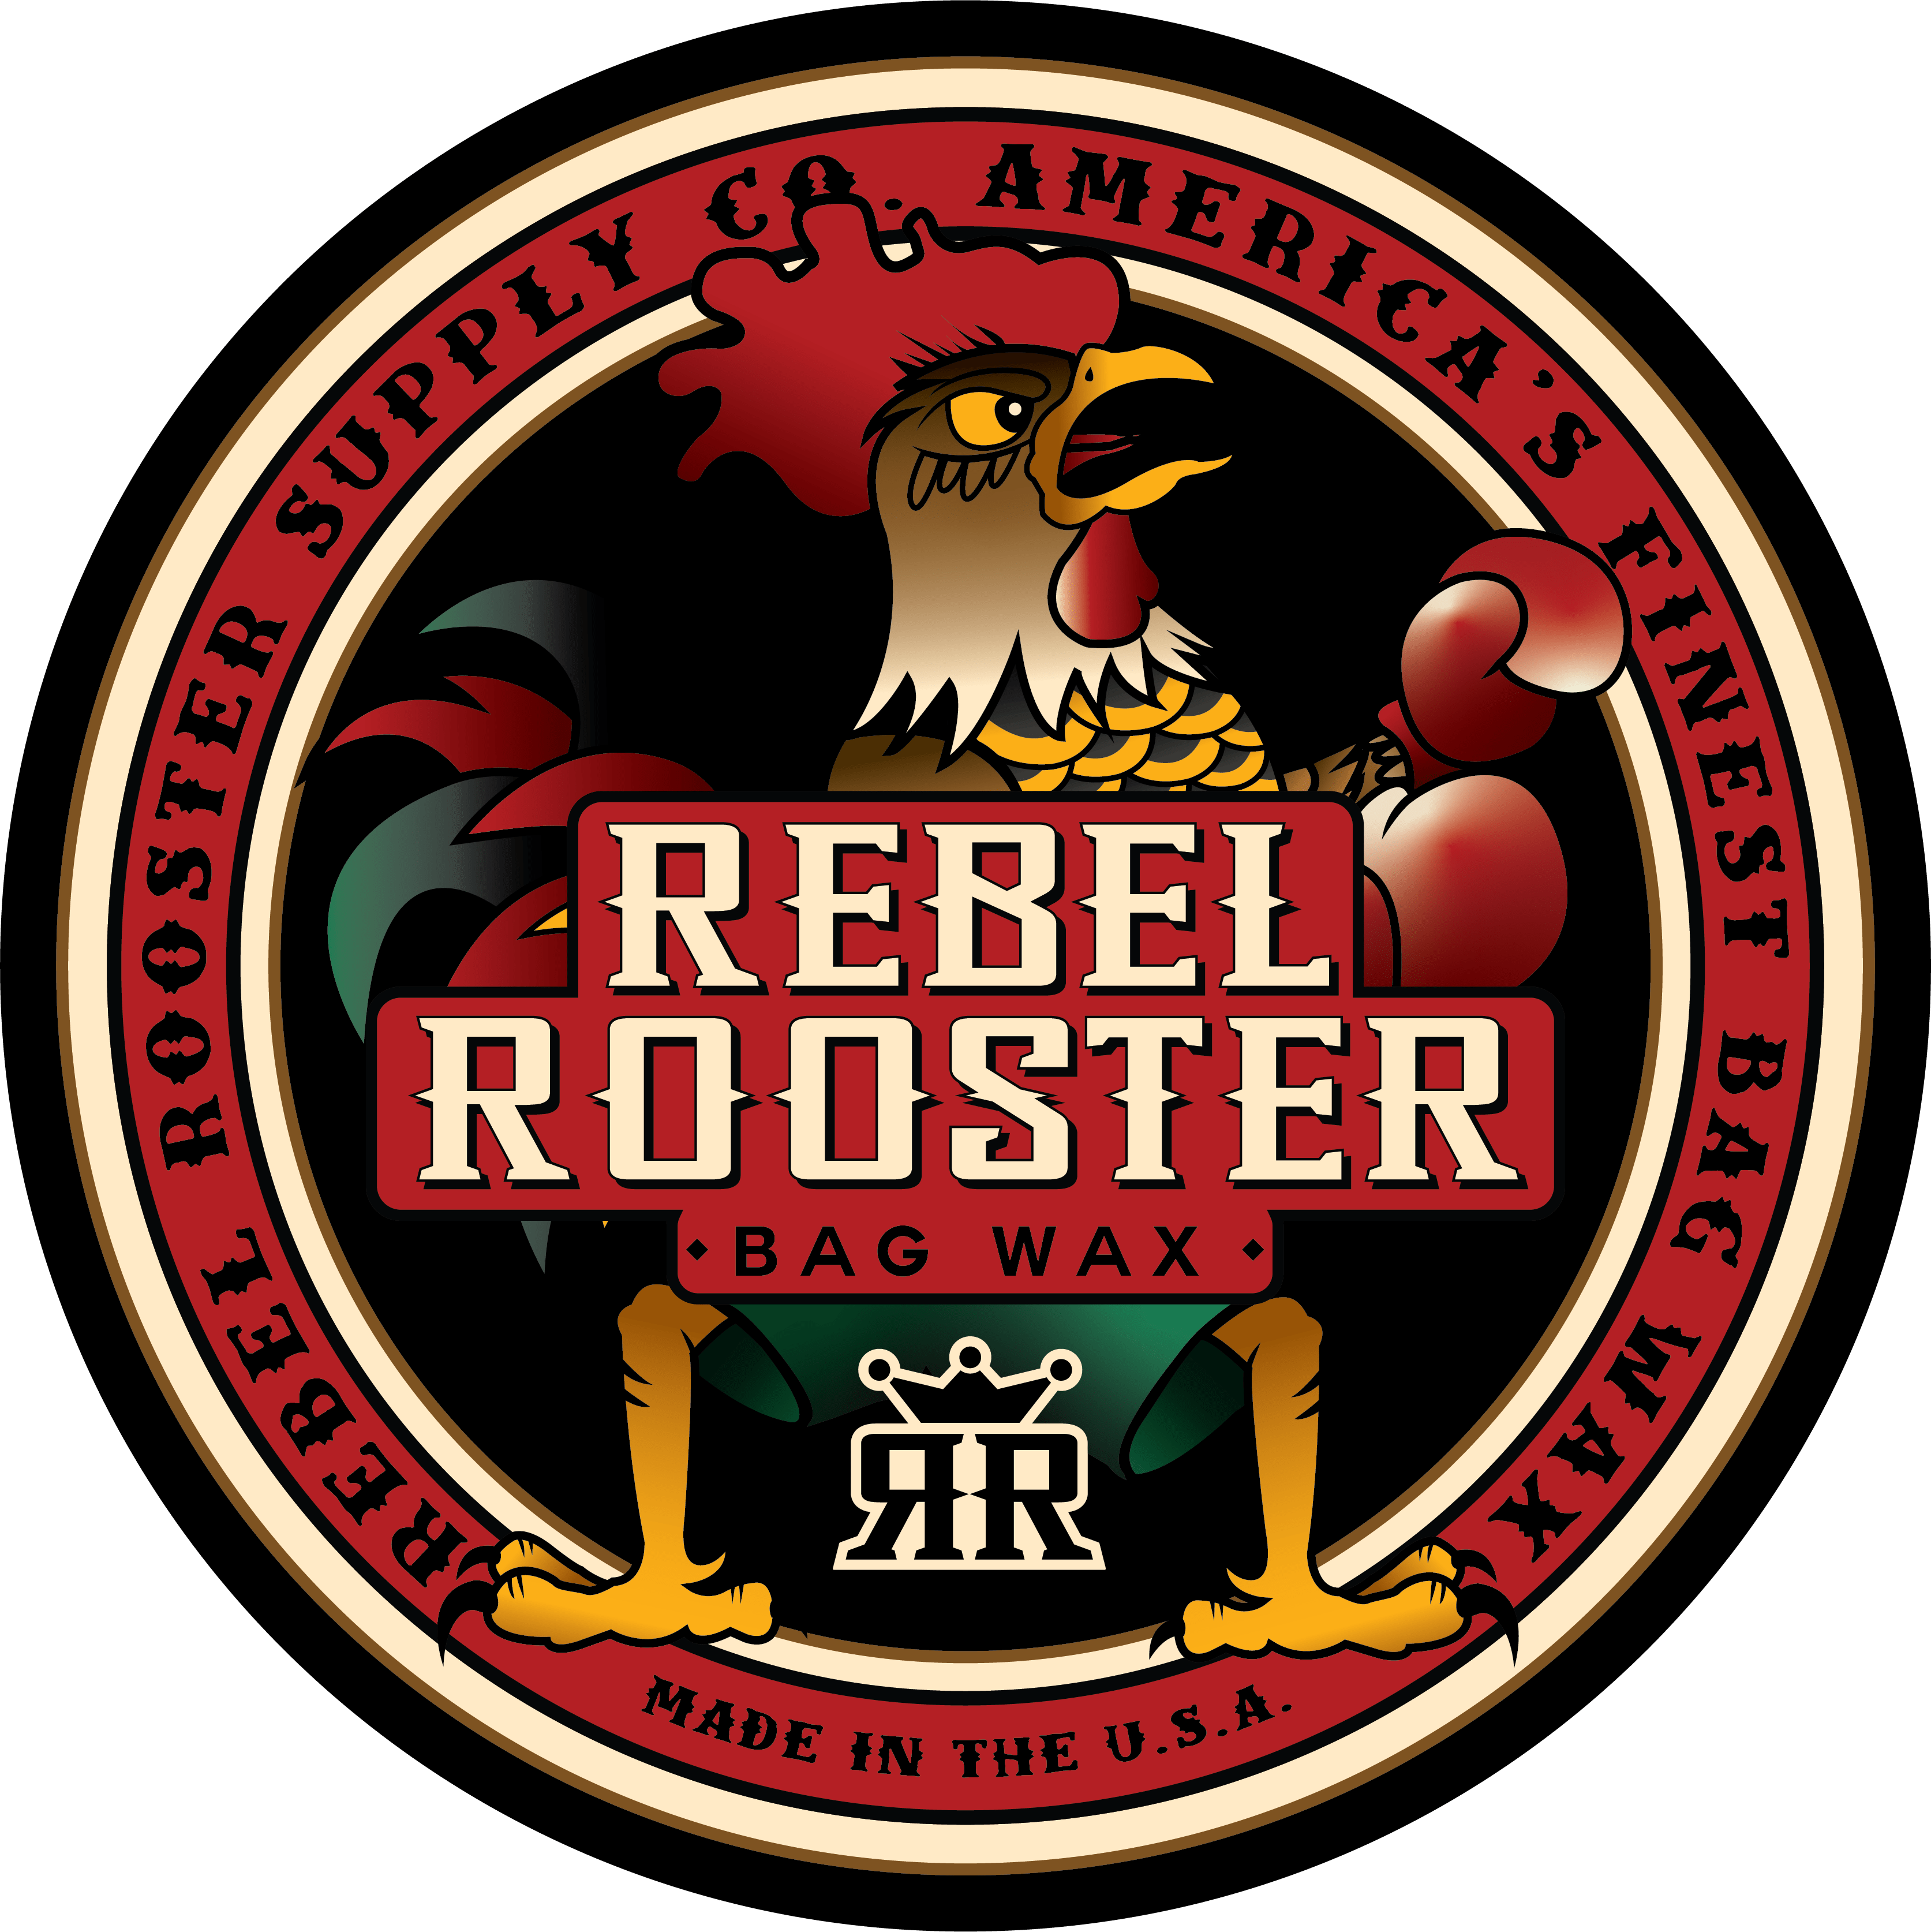 Rebel Rooster Bag Wax